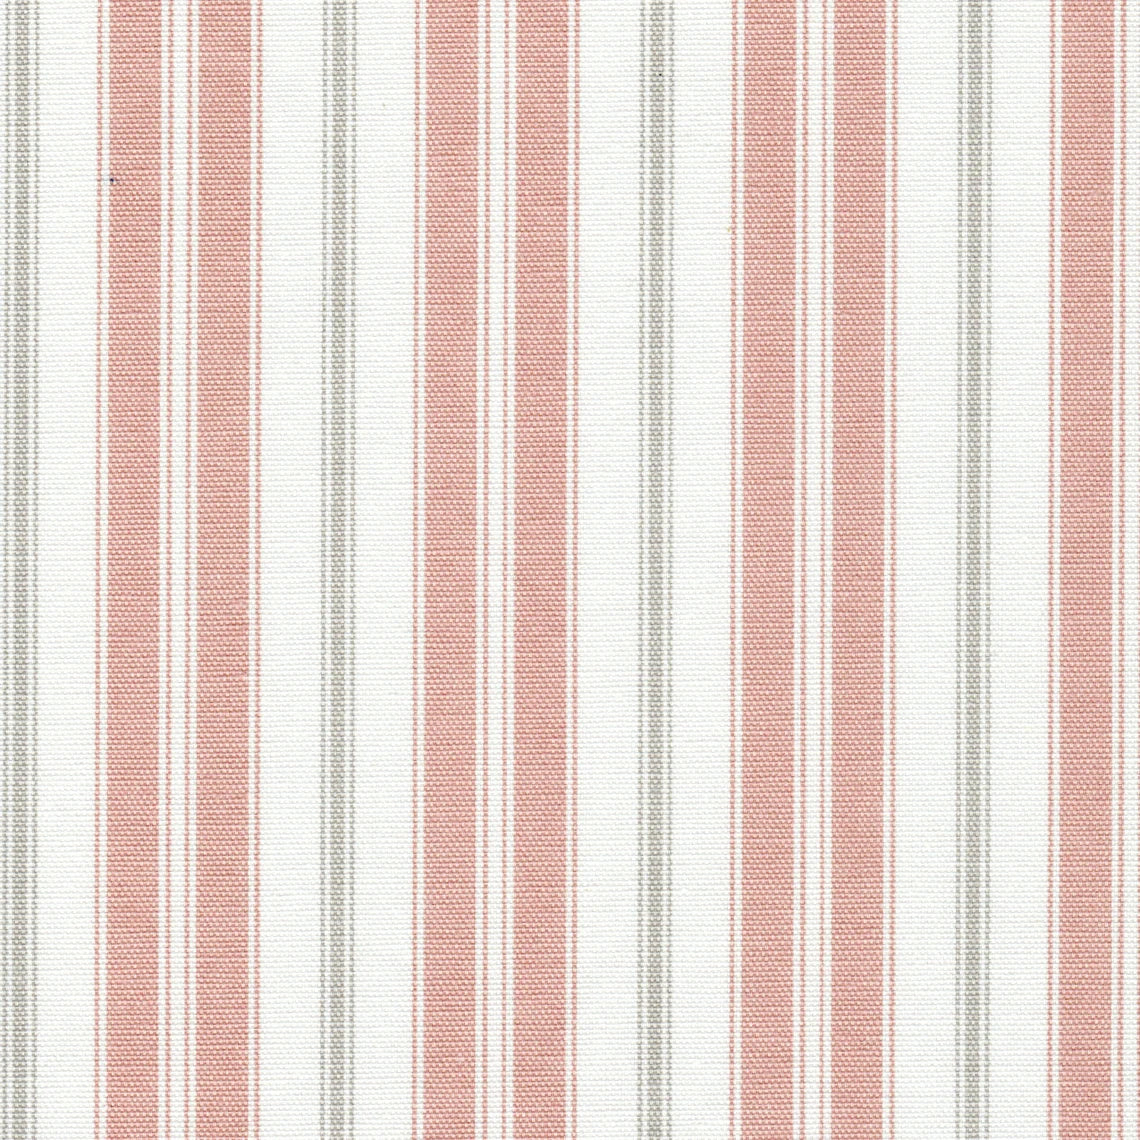 tailored tier cafe curtain panels pair in newbury blush stripe- pink, gray, white